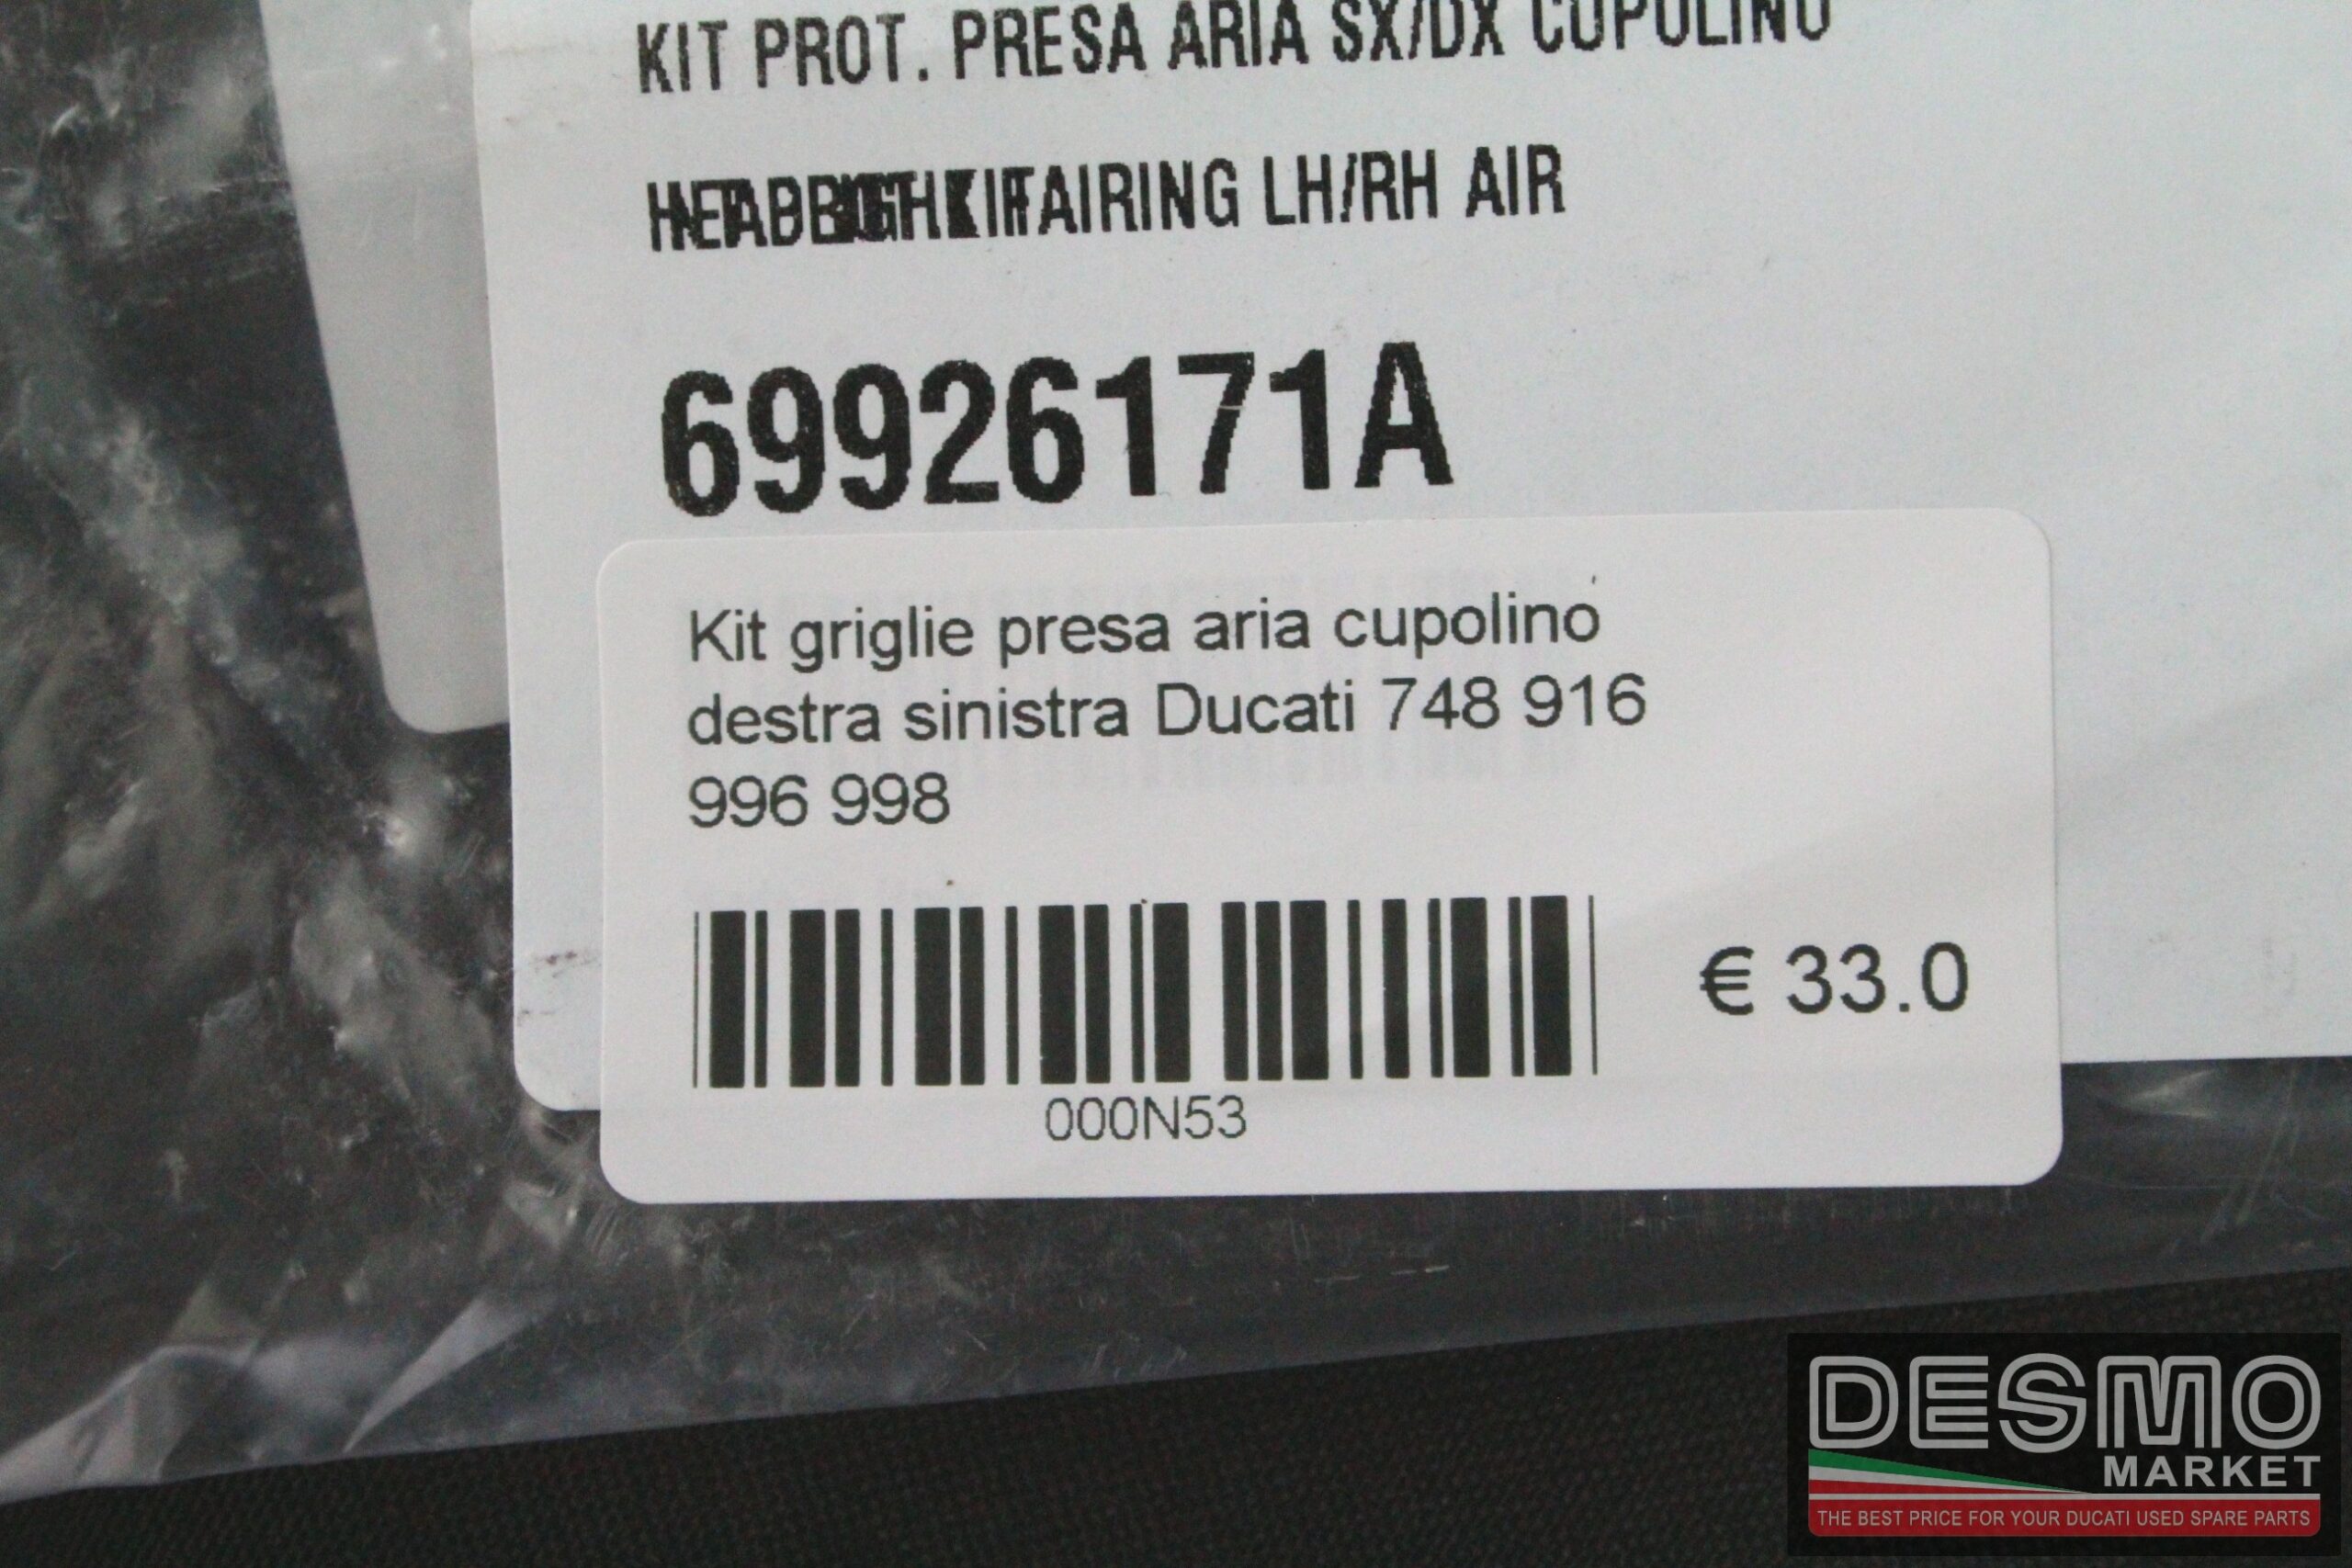 Kit griglie presa aria cupolino Ducati 748 916 996 998